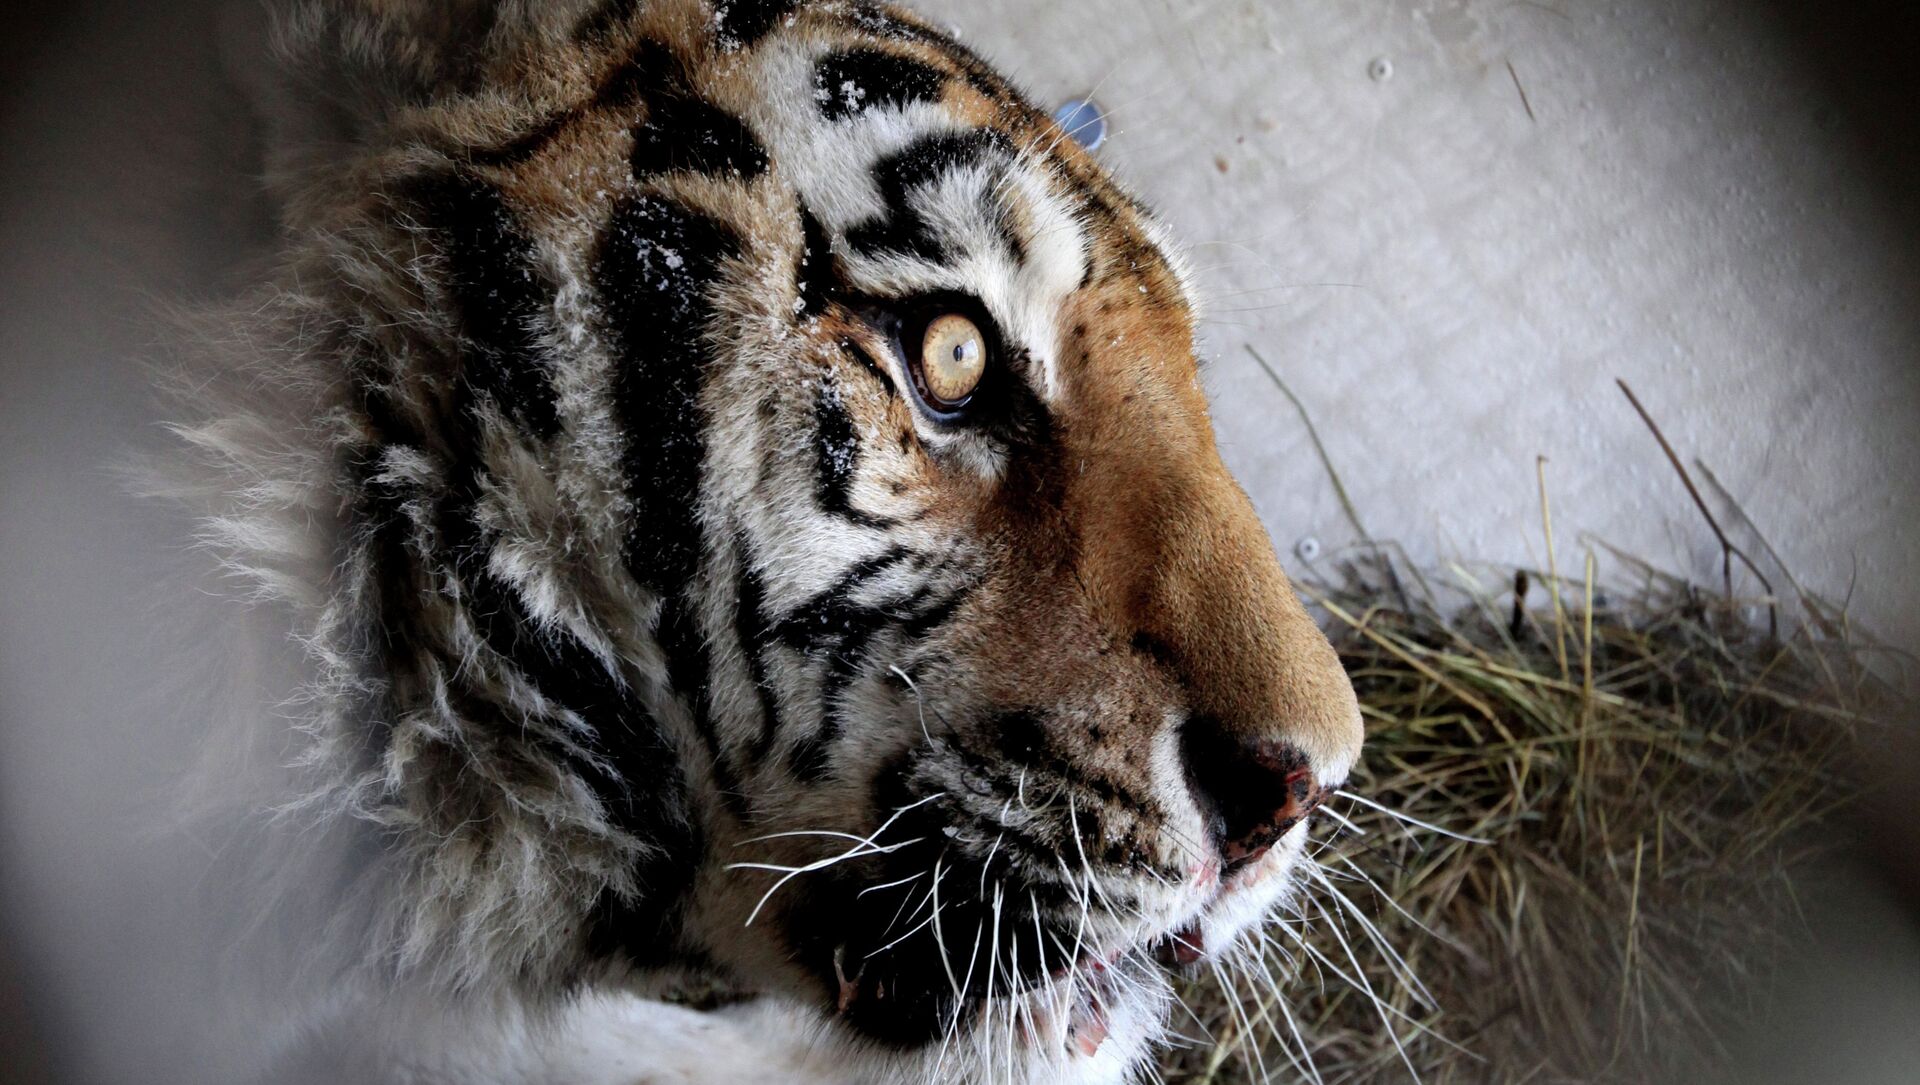 Спасенного амурского тигра доставили в сафари-парк - Sputnik Молдова, 1920, 08.02.2021